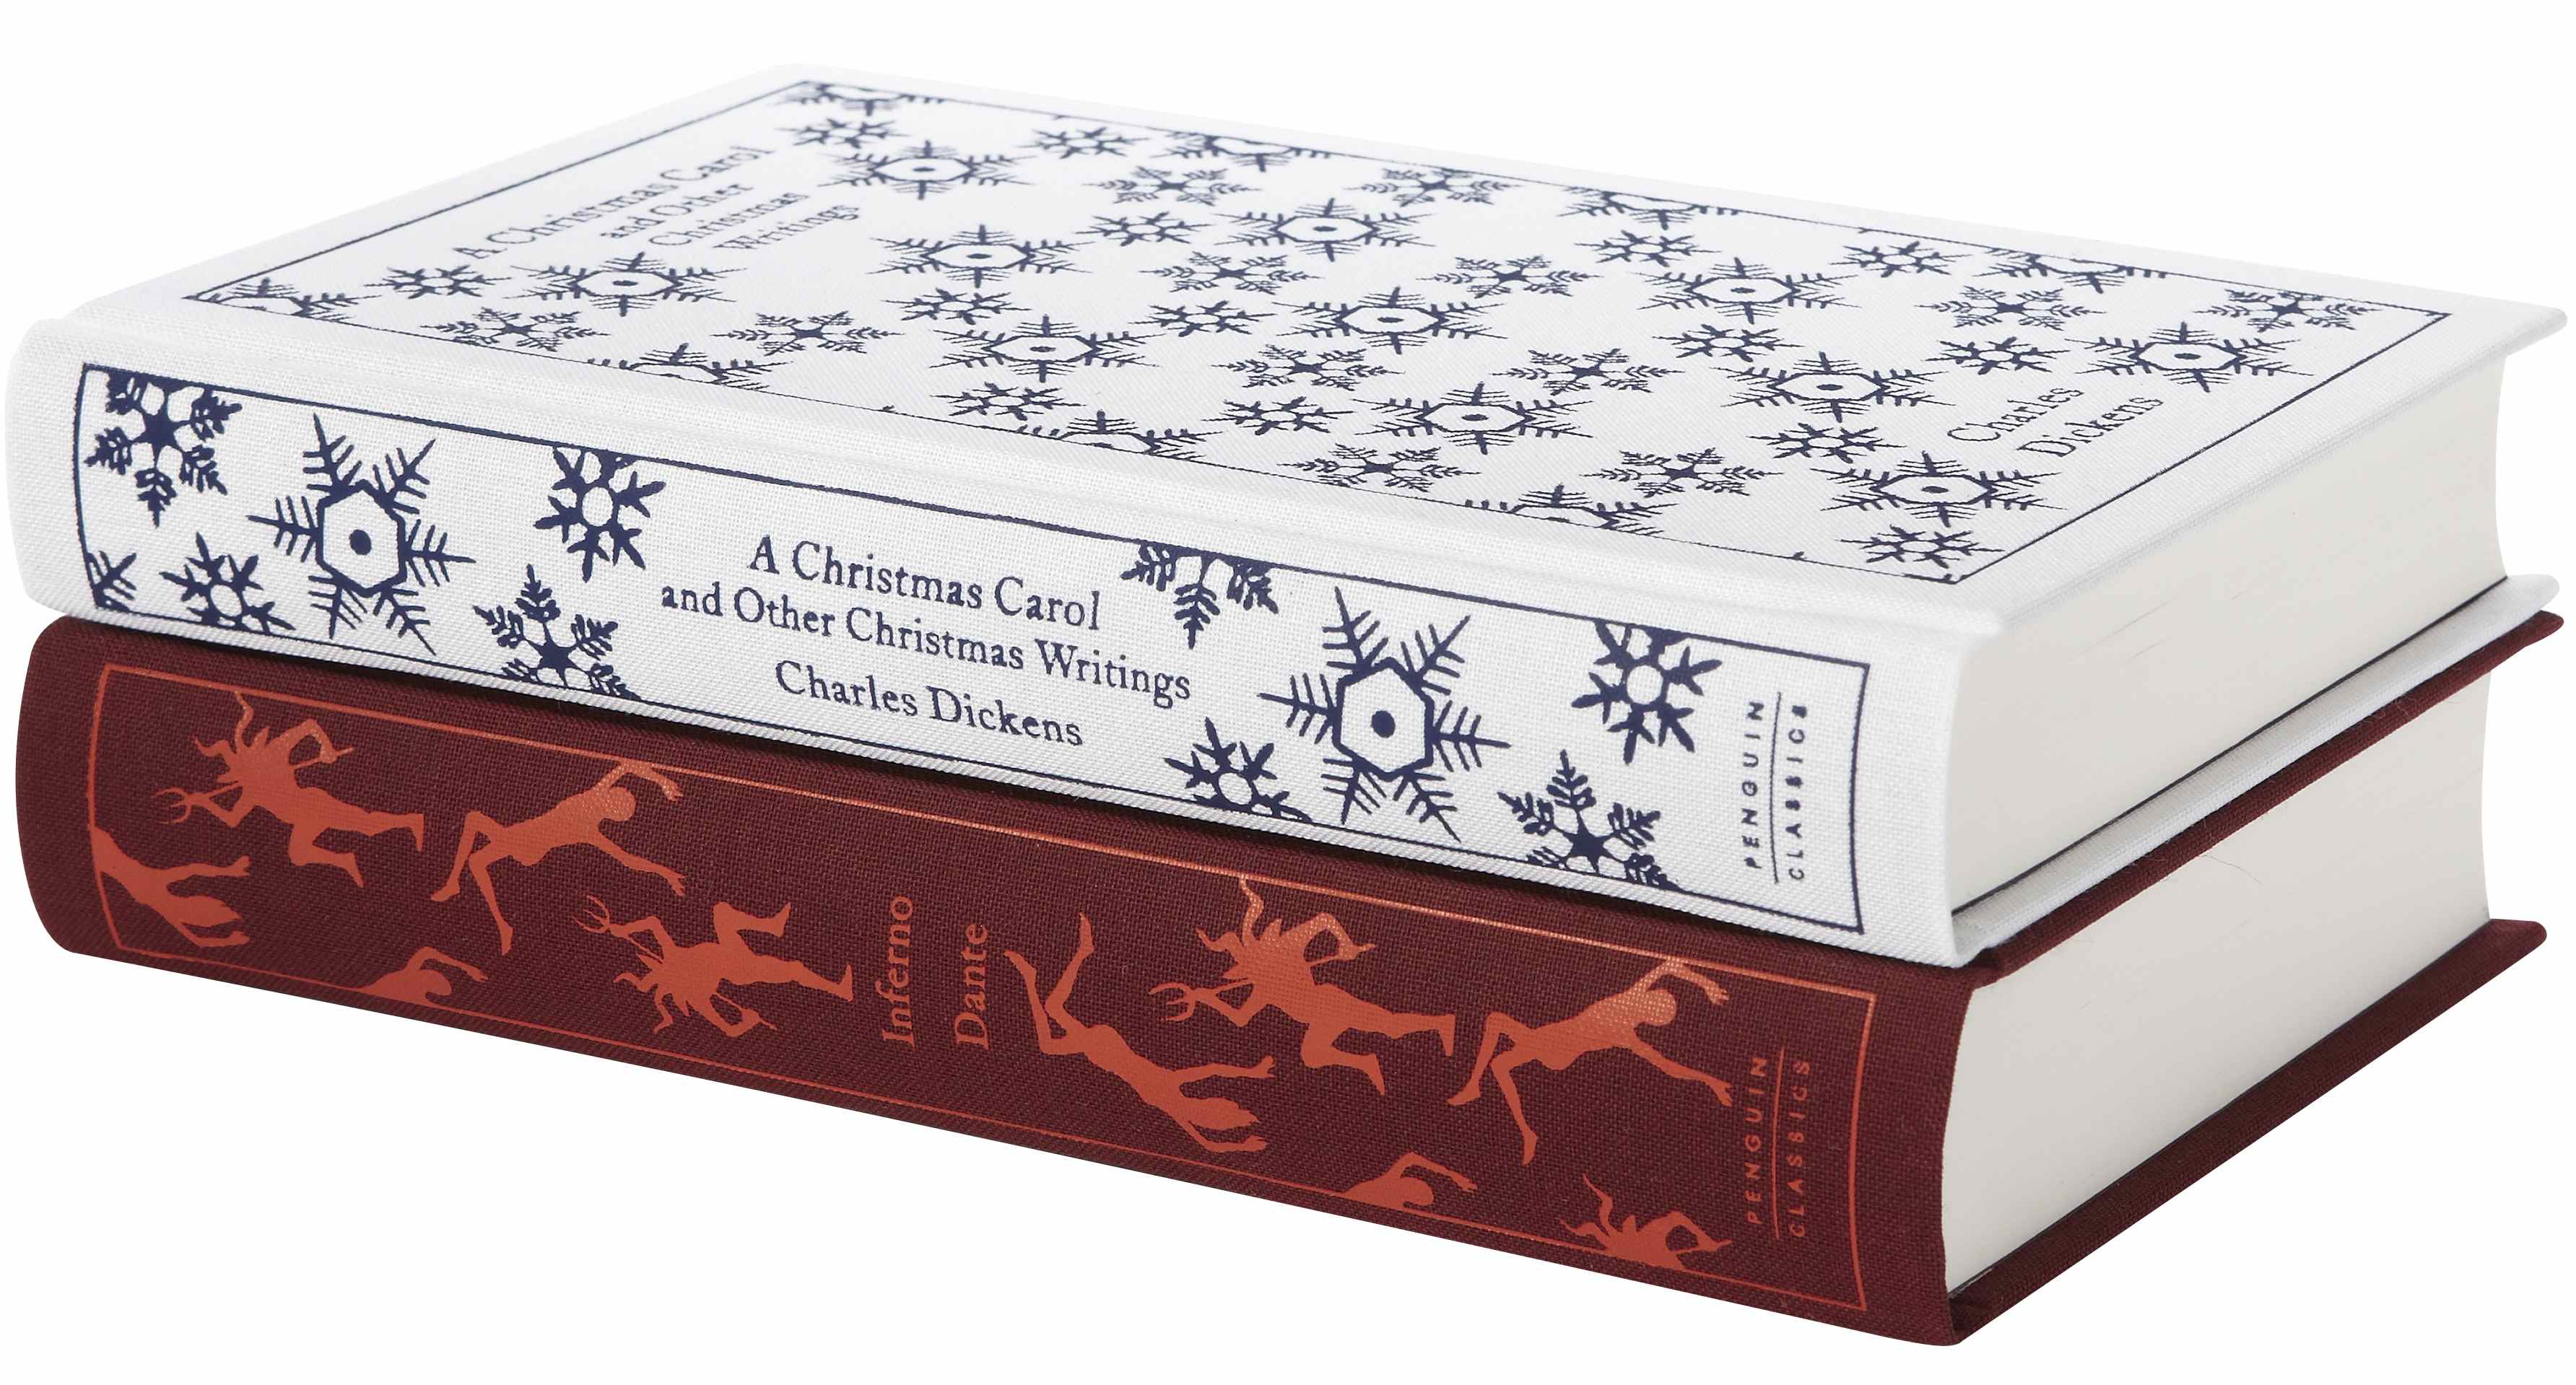 Charles Dickens' "A Christmas Carol", Dante's "Inferno"